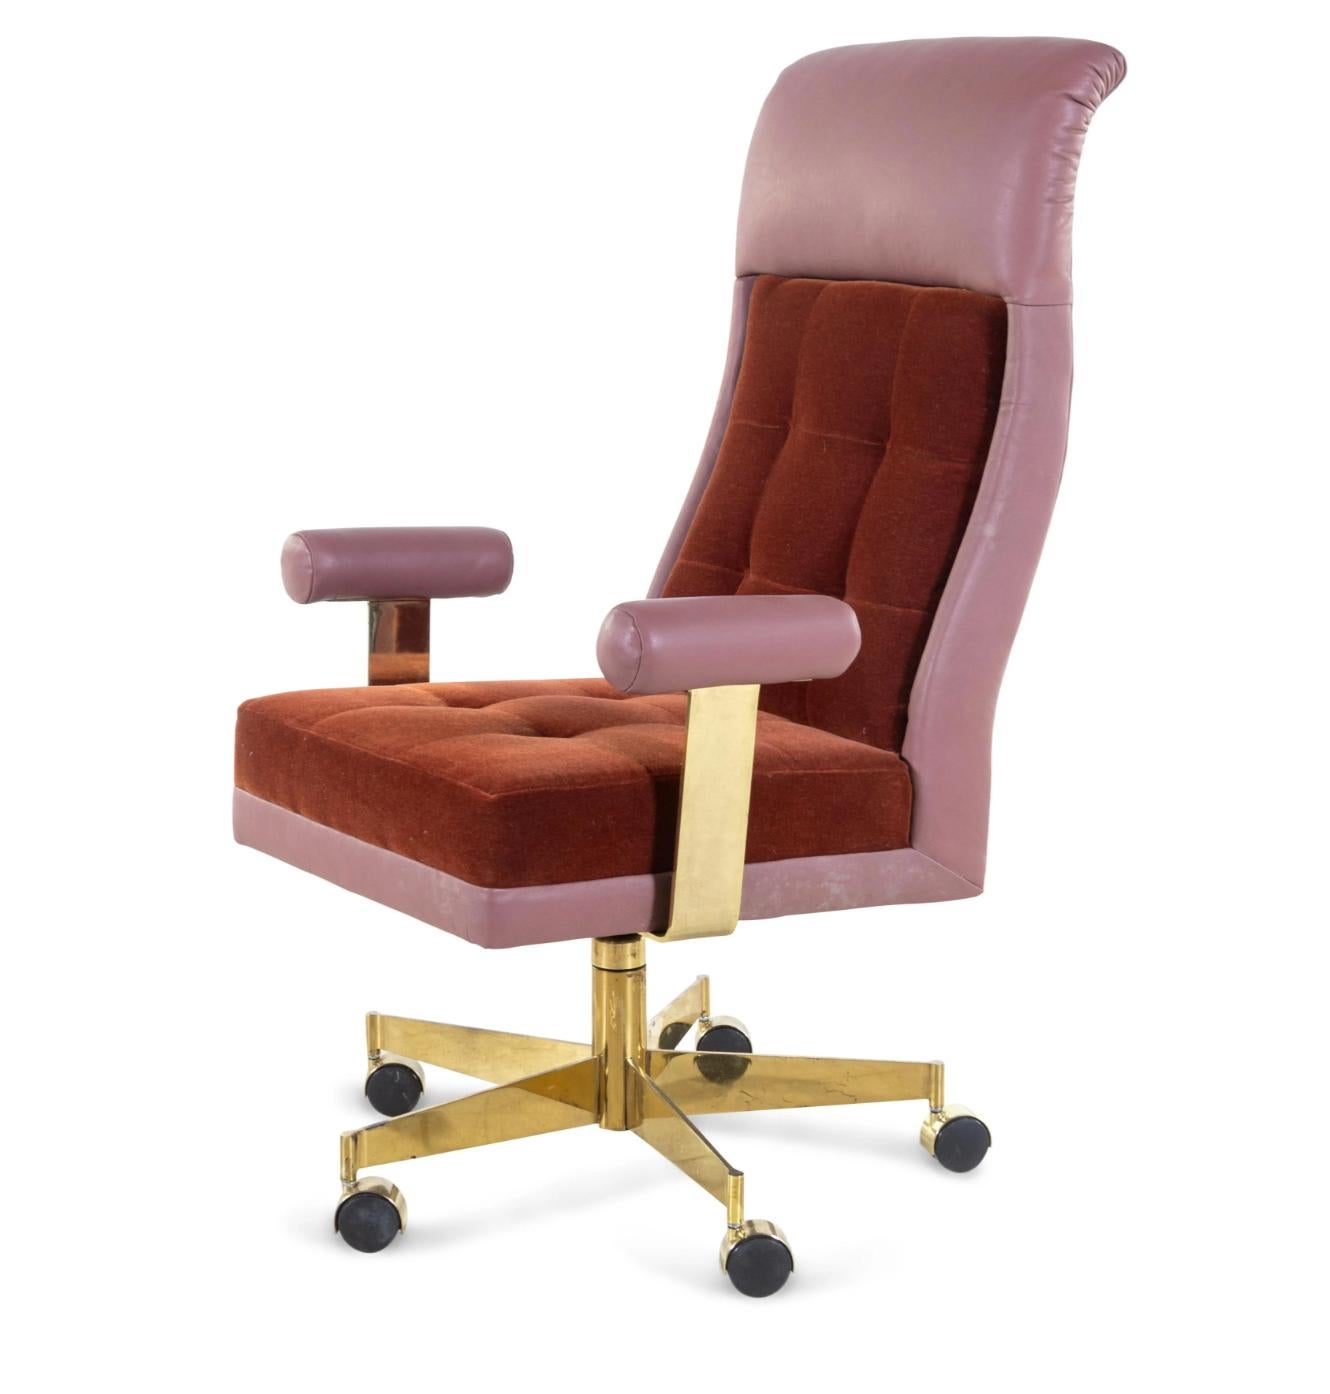 Modern Vladimir Kagan Leather and Mohair Executive Desk Chair, circa 1979, Signed 